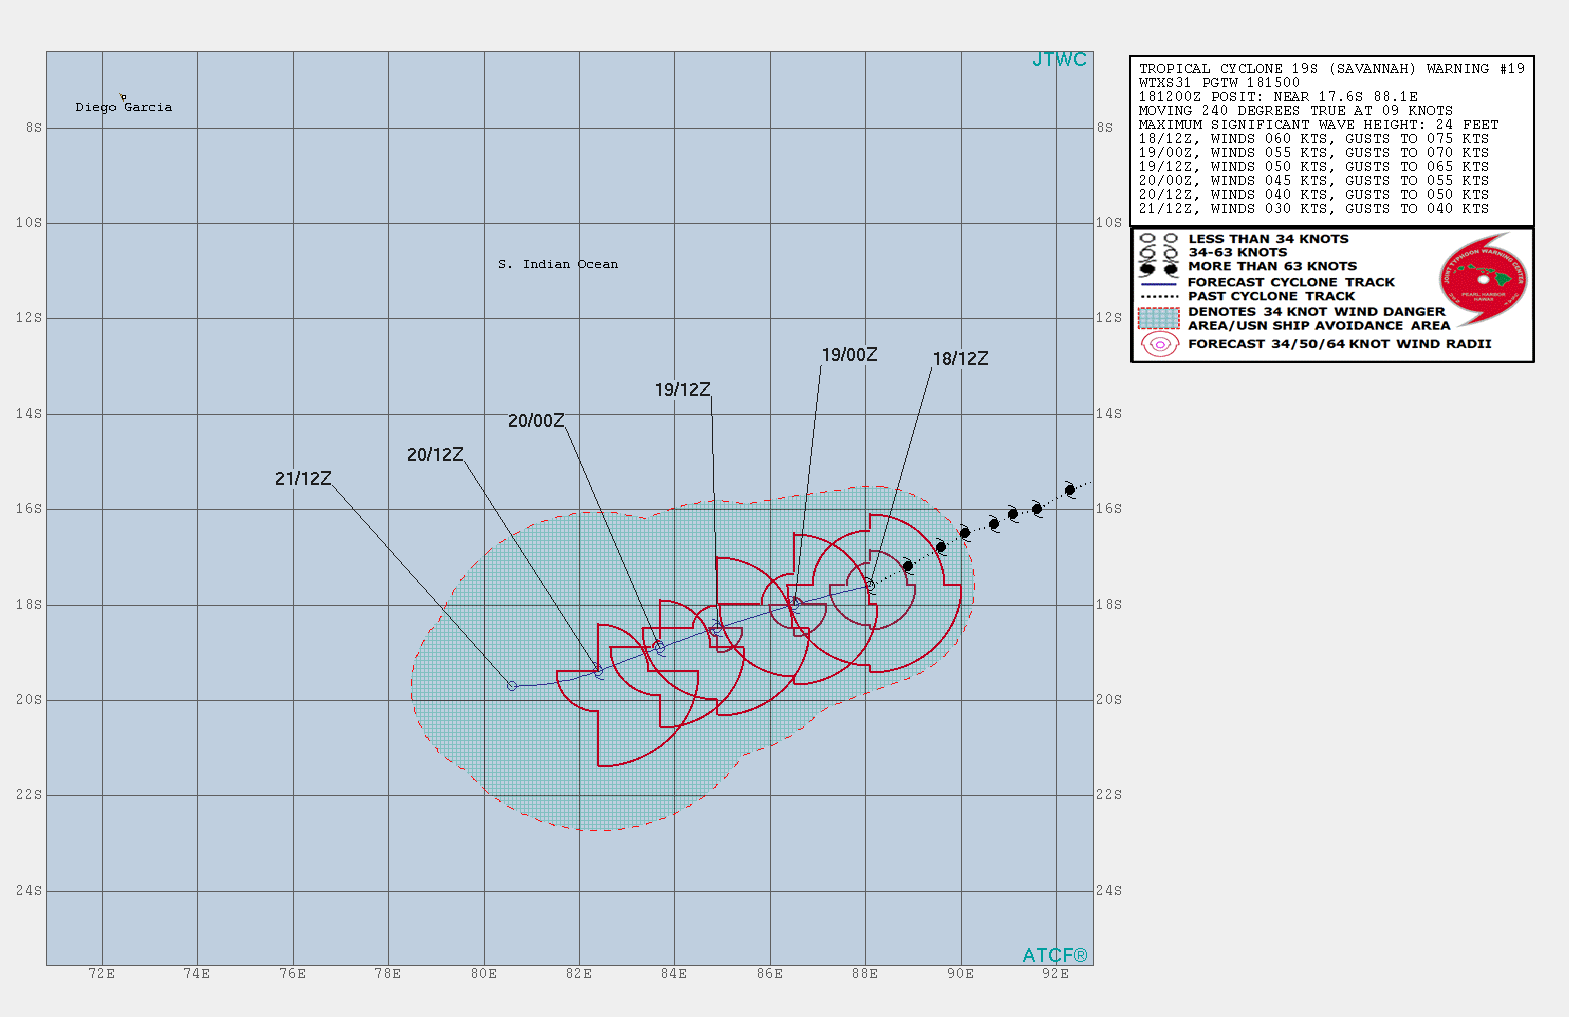 WARNING 19/JTWC